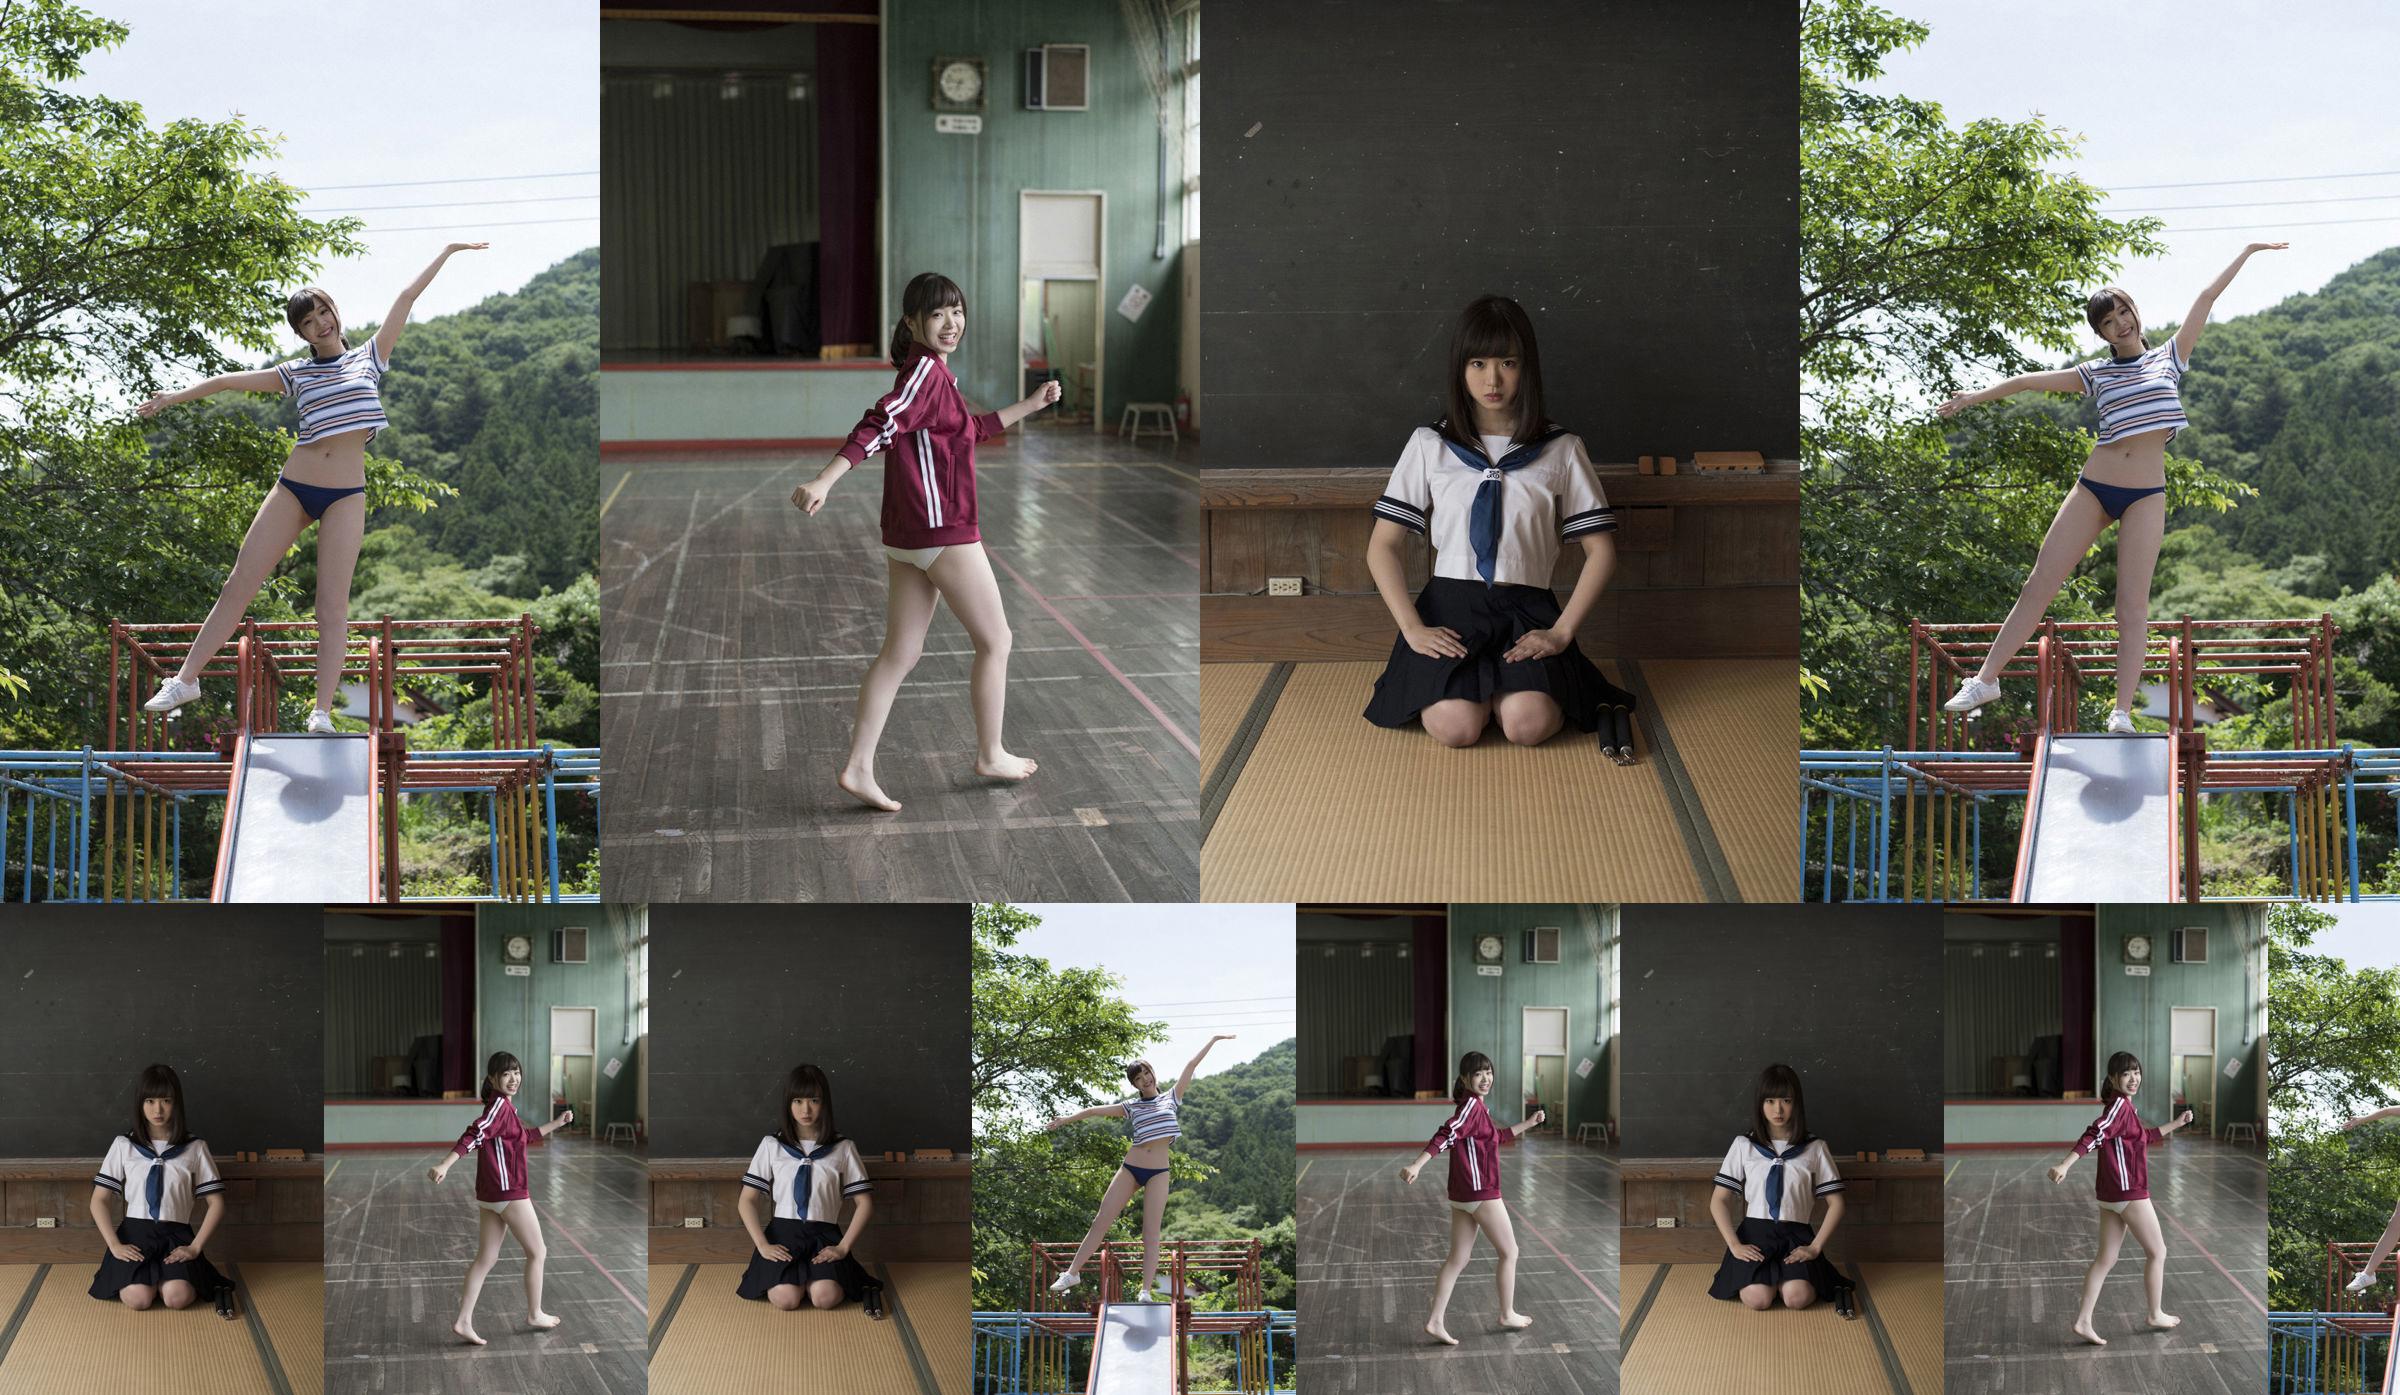 [WPB-net] Extra No.591 Sakura Komoriya 飛谷さくら - National nunchaku girl No.52c41d Page 2